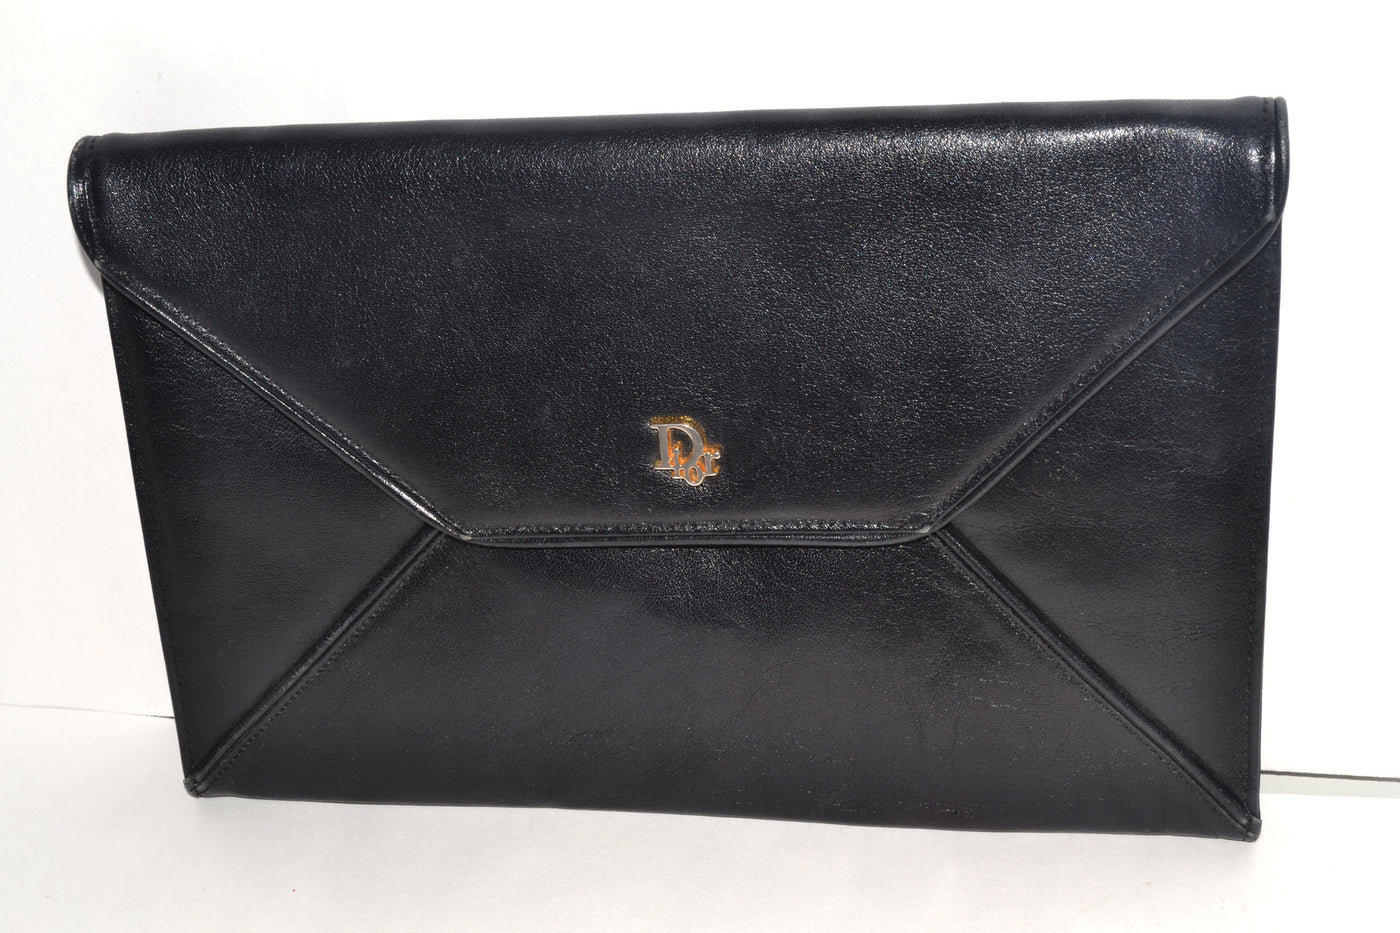 Vintage Christian Dior Black Leather Clutch